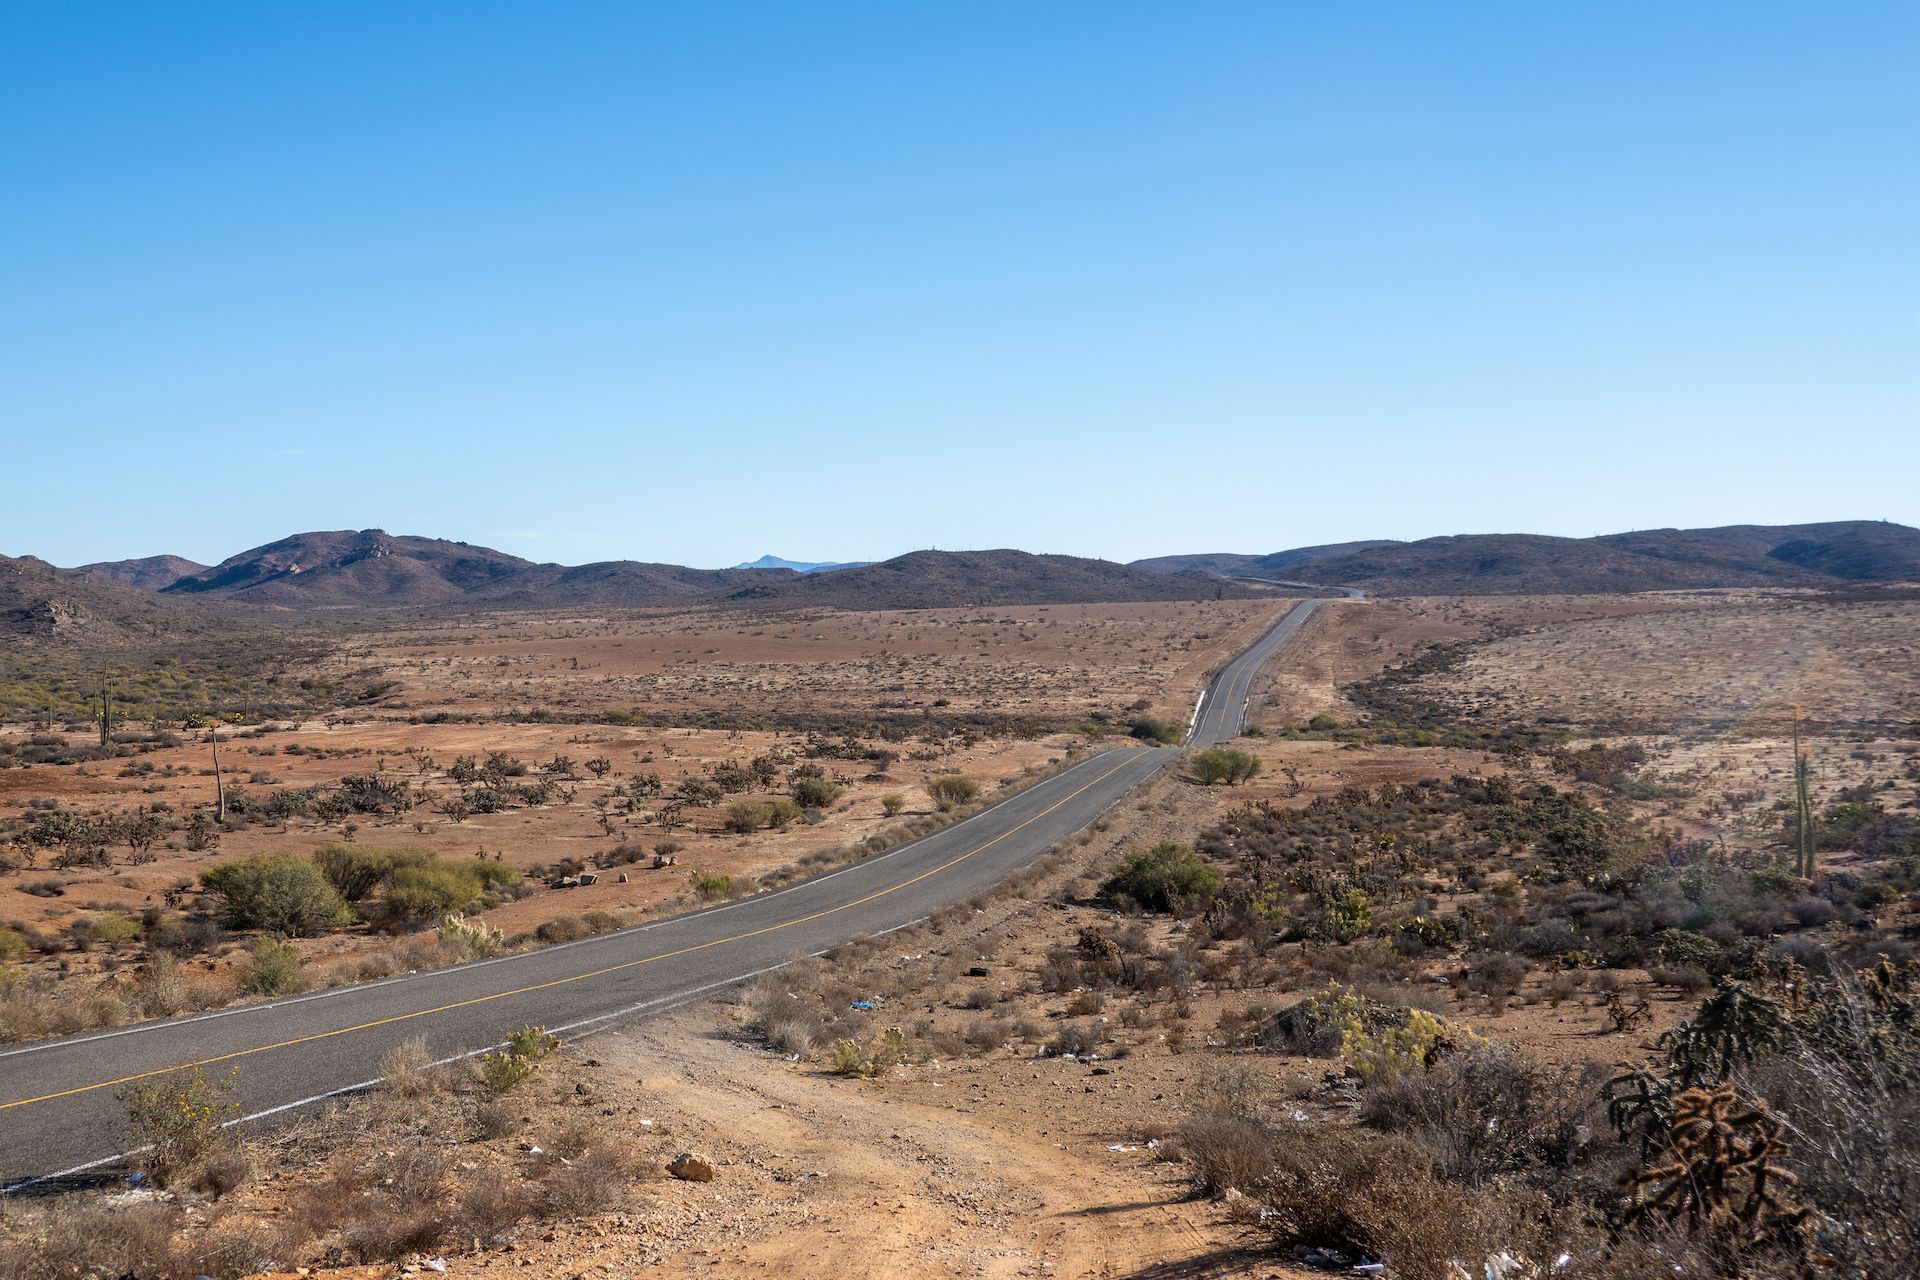 The long drive ahead through the desert